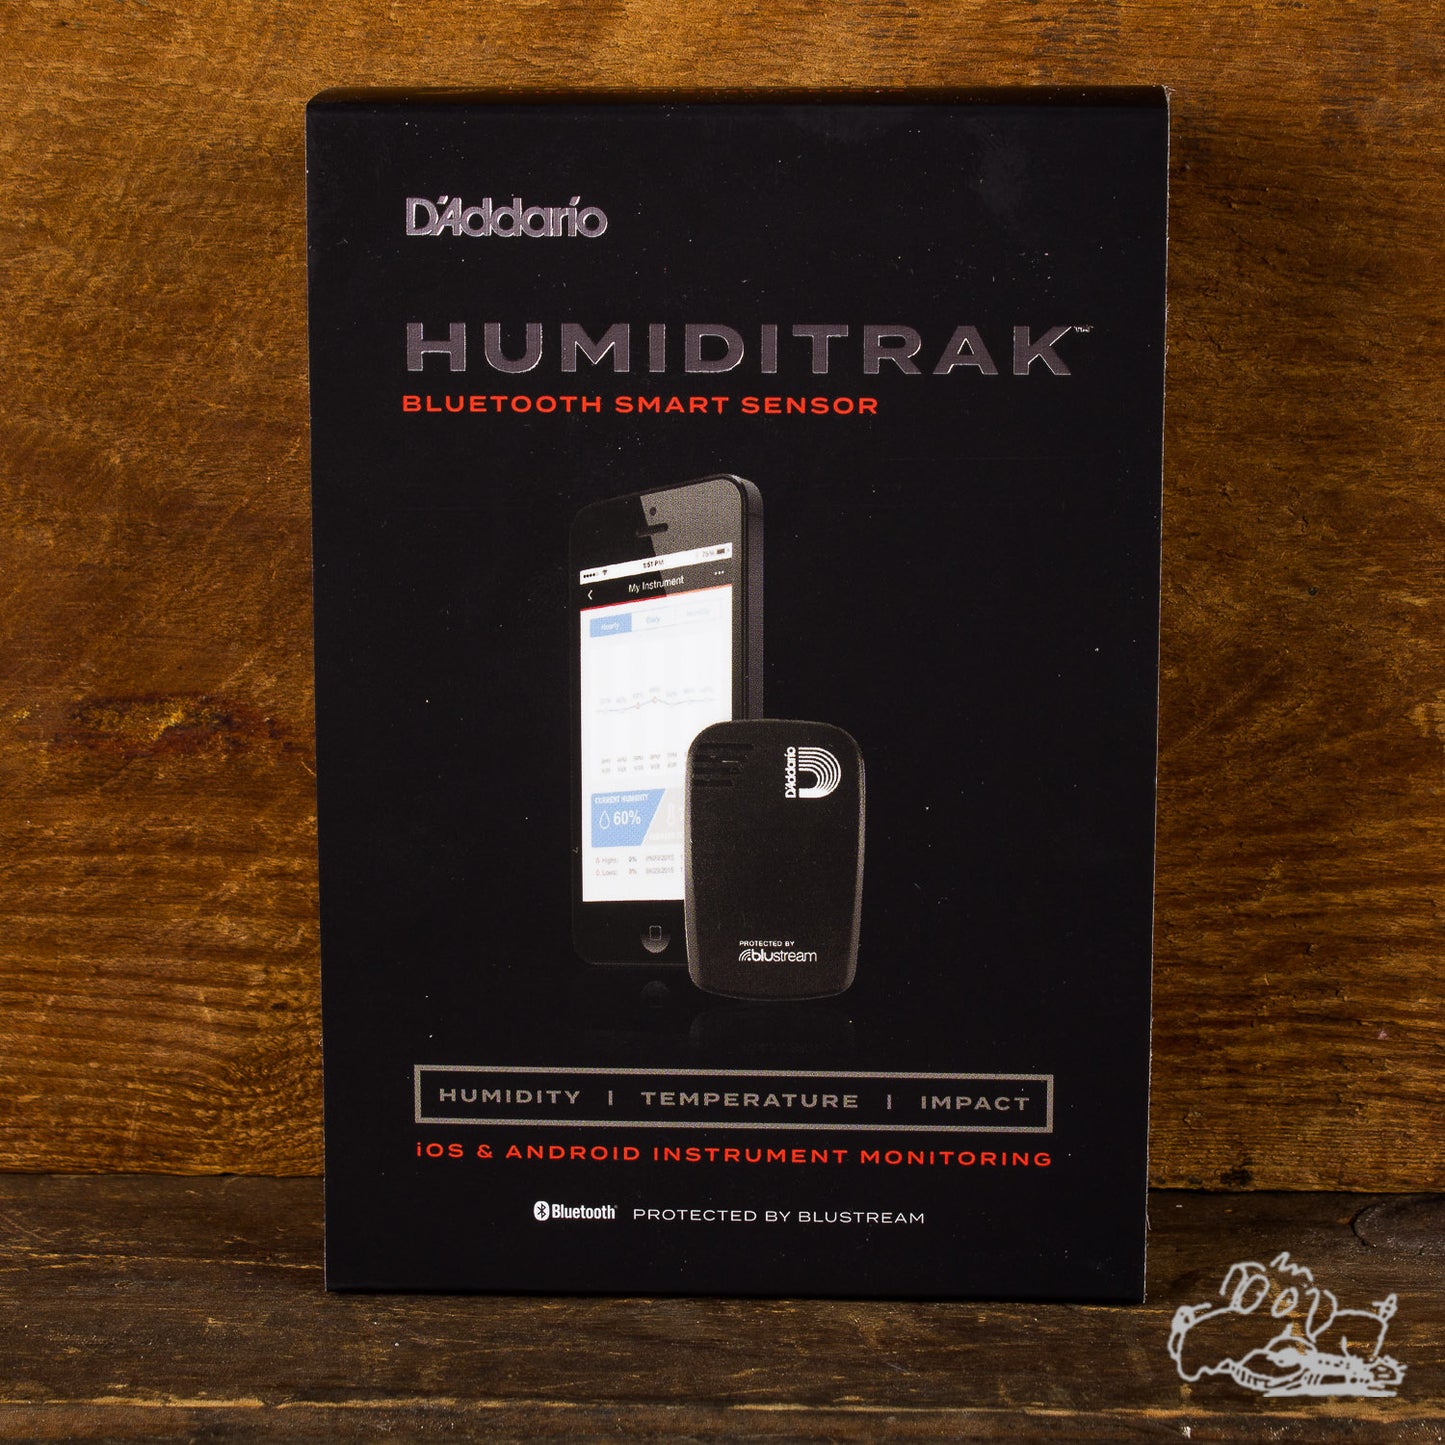 D'Addario Guitar Humidifier Tracking - Humiditrak - Bluetooth Humidity and Temperature  Sensor to Monitor Guitar Humidification, Temperature, Impact